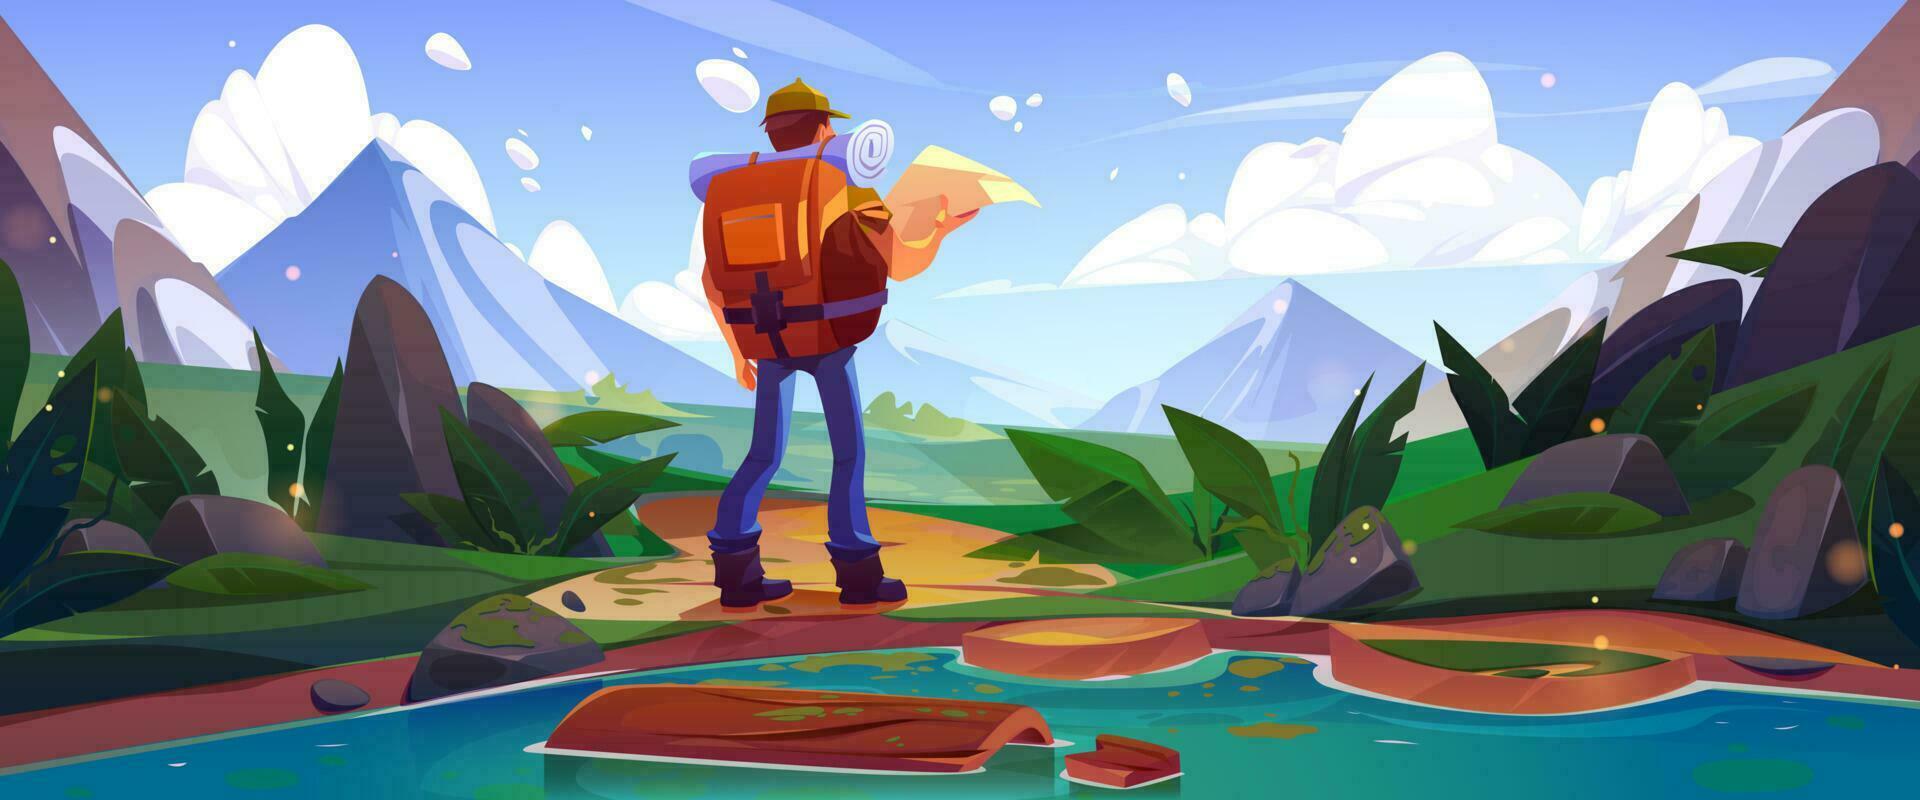 Man travel near lake and mountain illustration vector